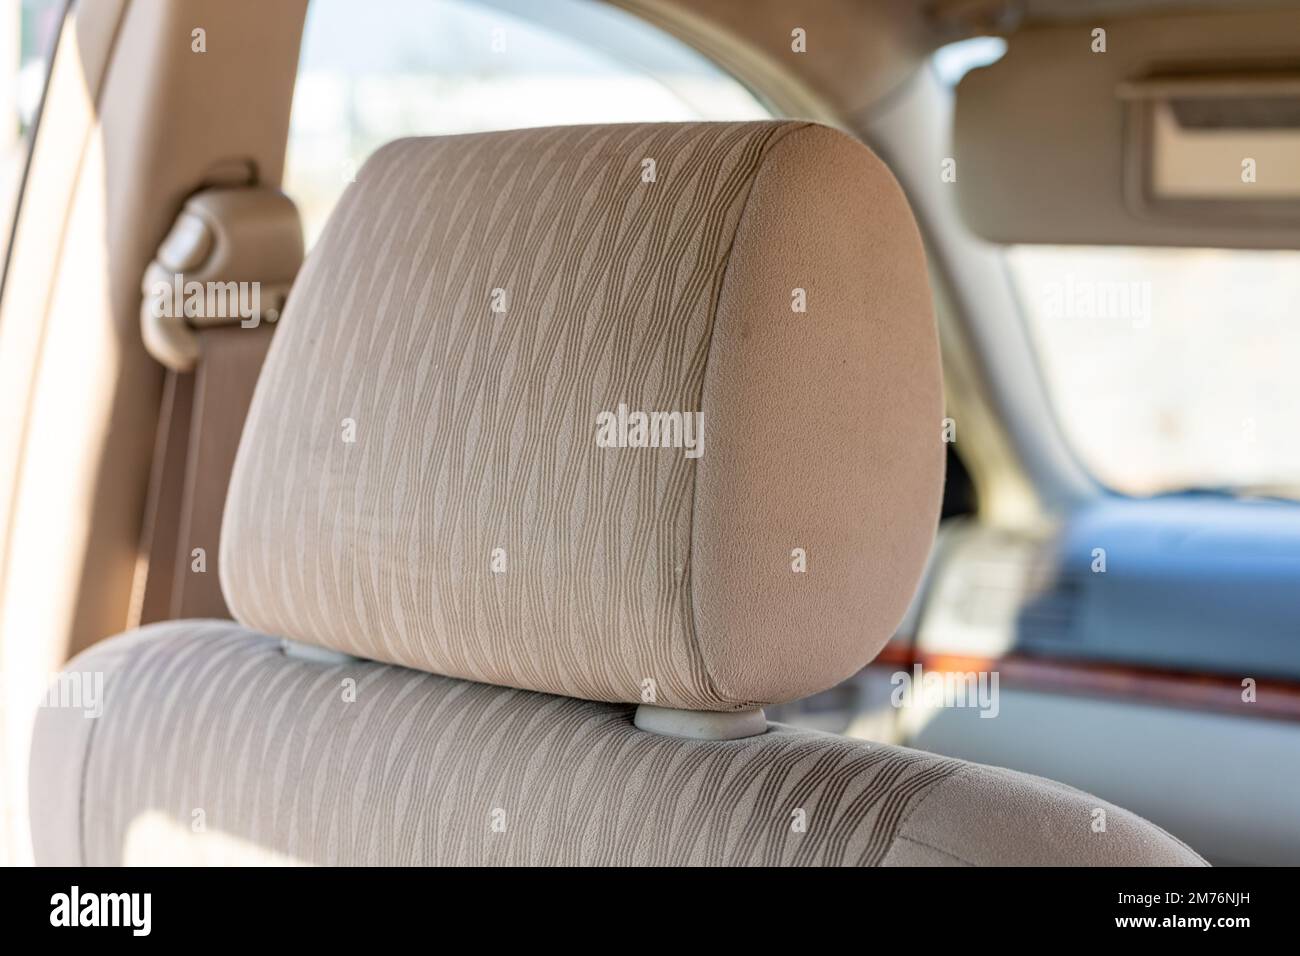 Vehicle seat headrest closeup view Stock Photo